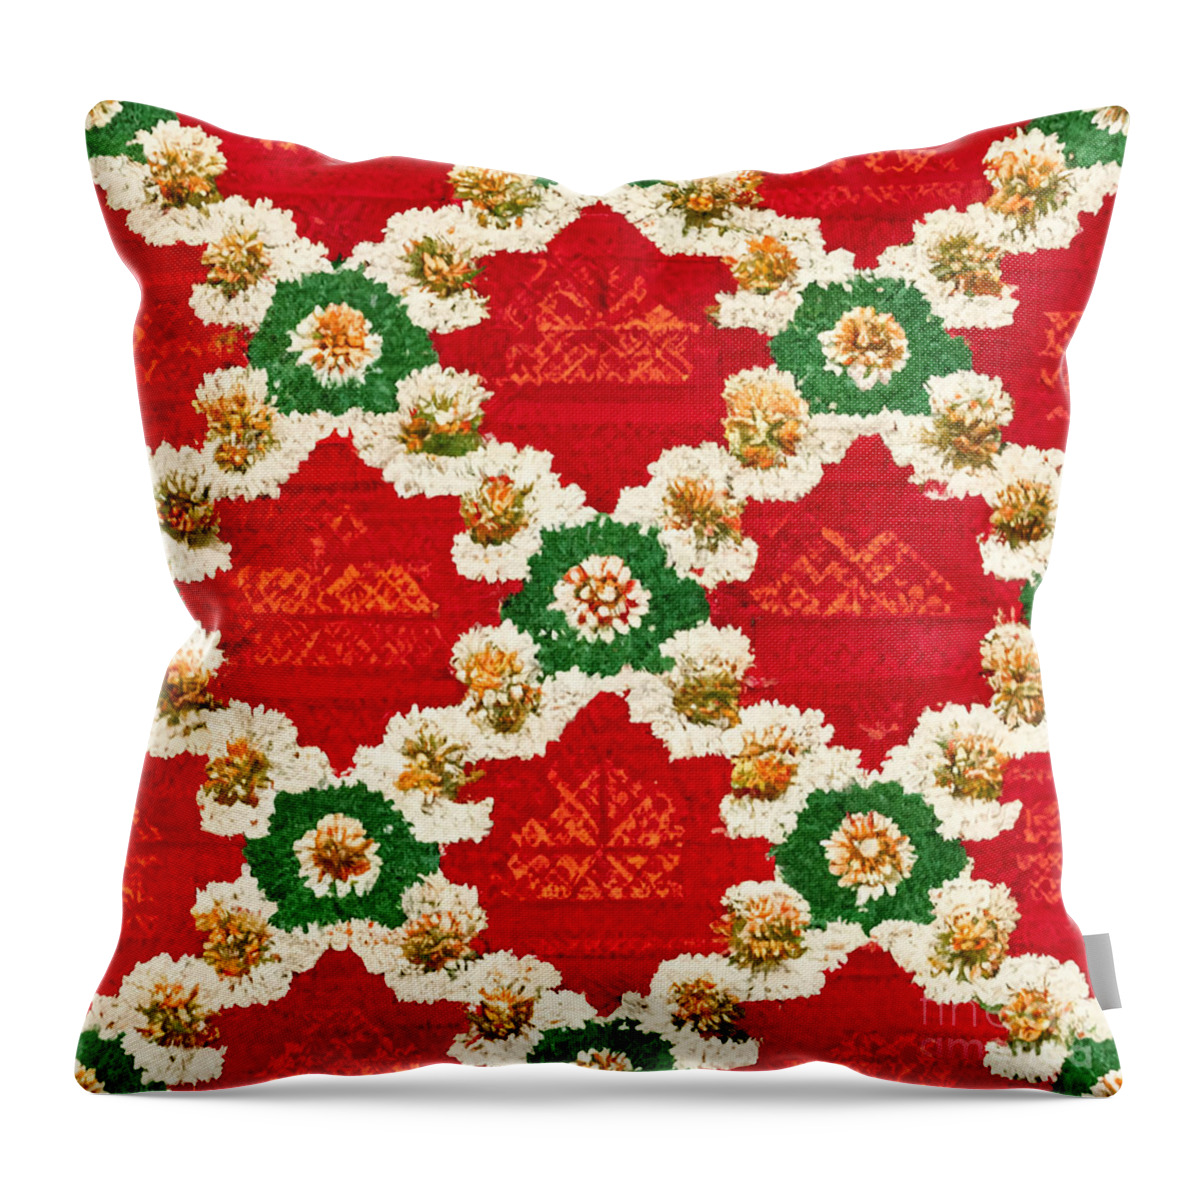 Series Throw Pillow featuring the digital art Seamless Christmas pattern #7 by Sabantha